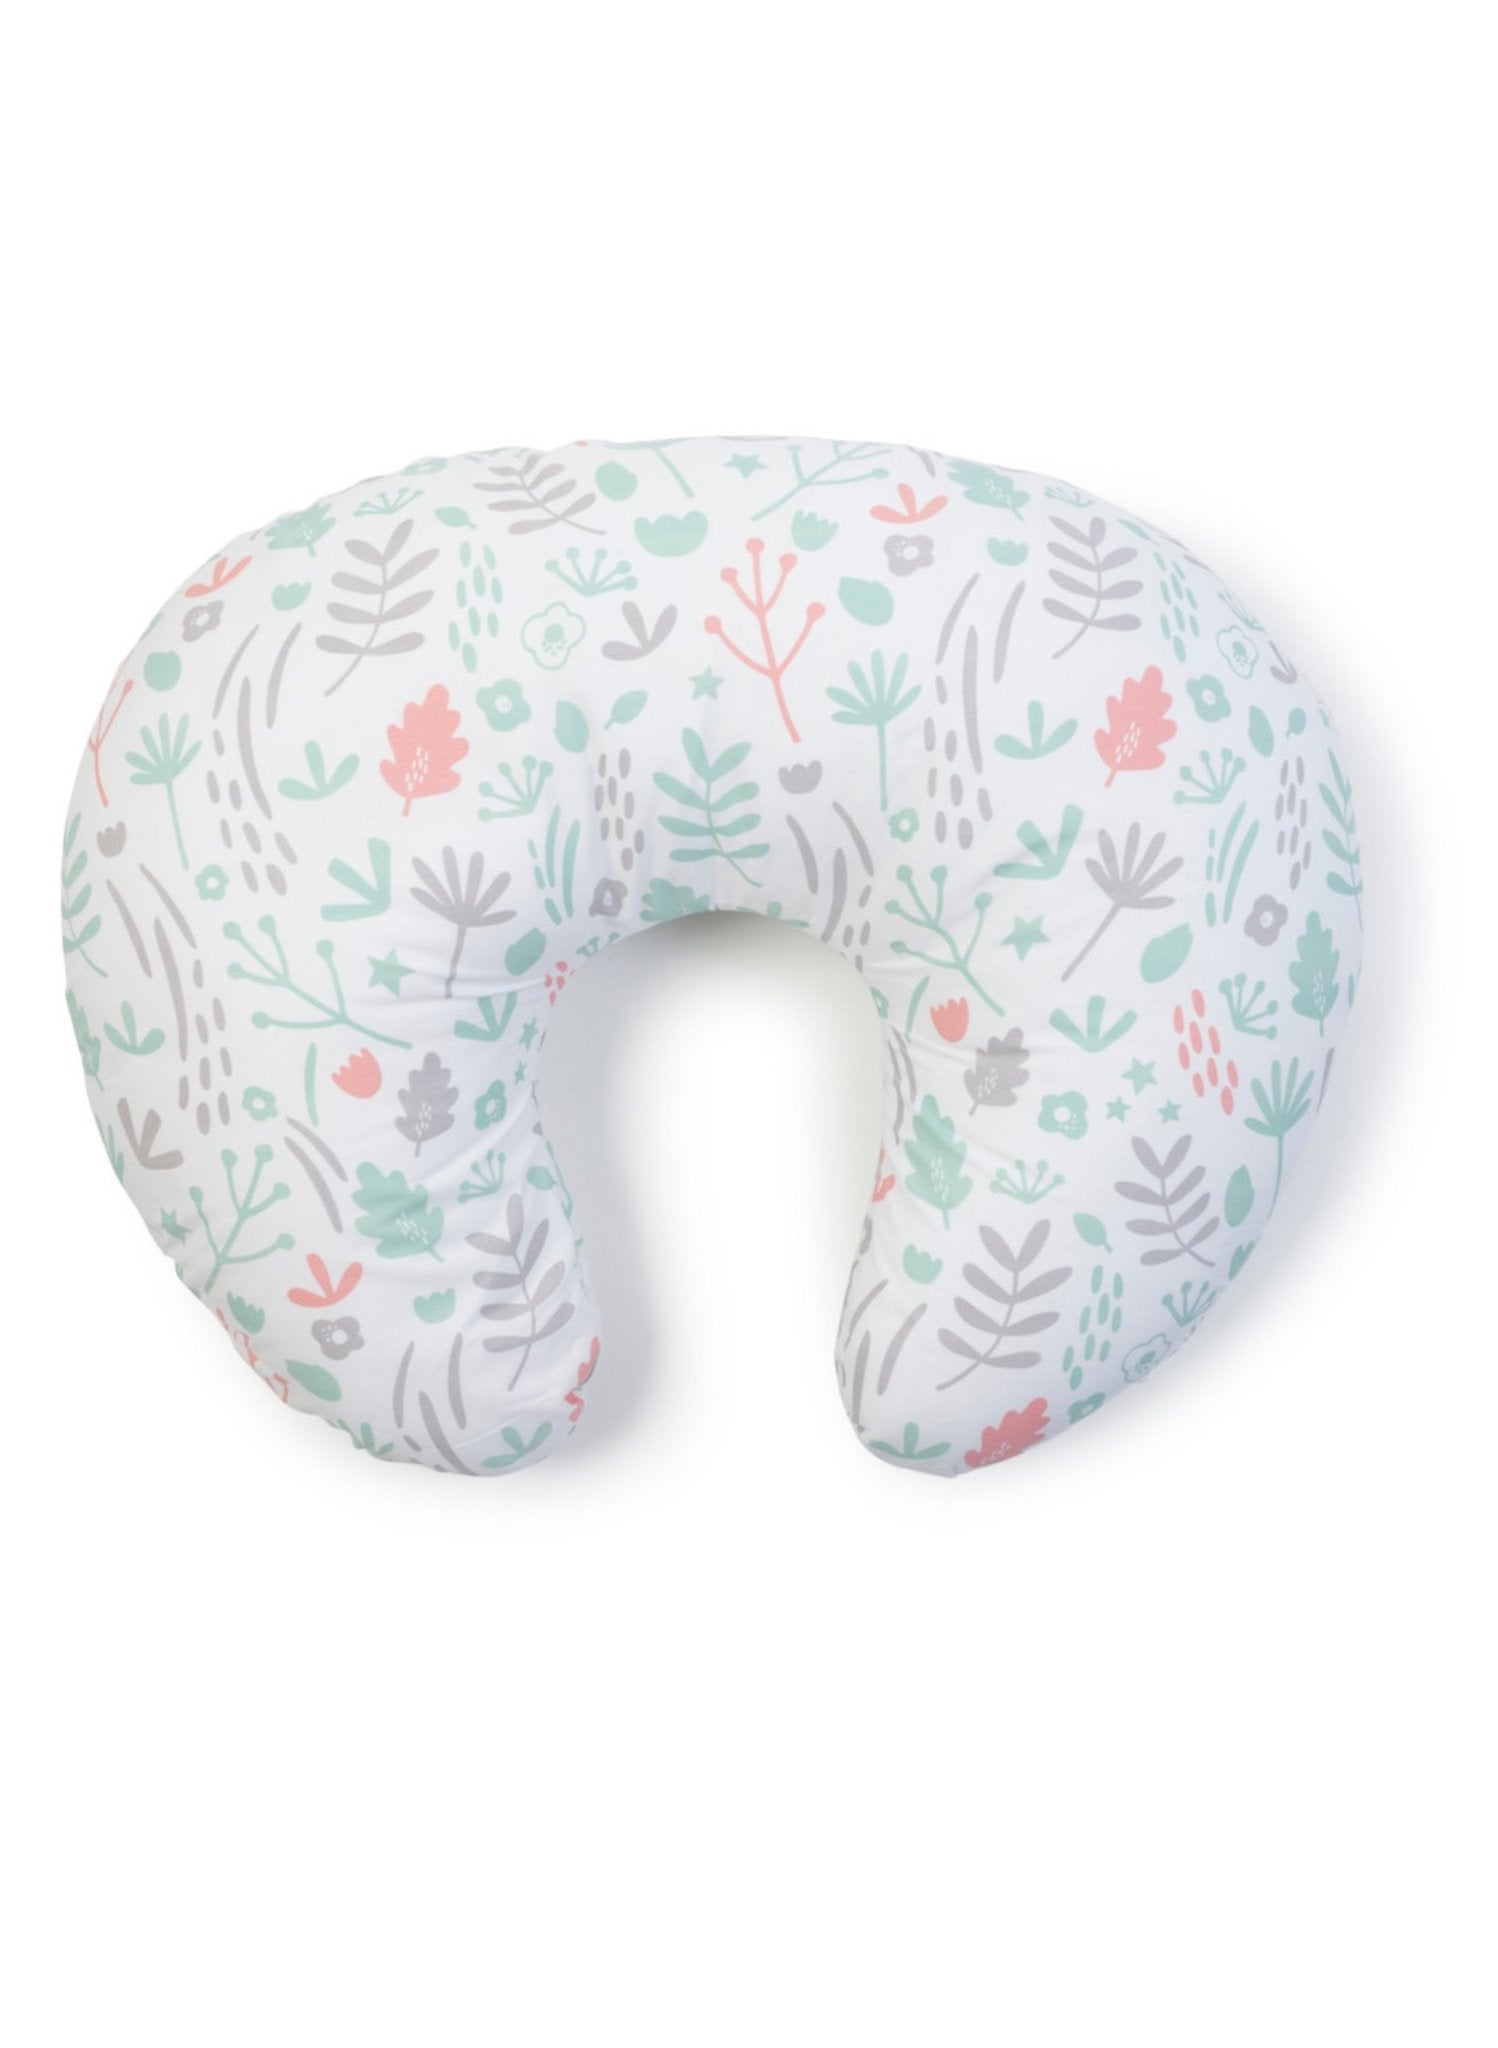 Dreamgenii Breastfeeding Nursing Pillow - Grey Coral - Mums and Bumps